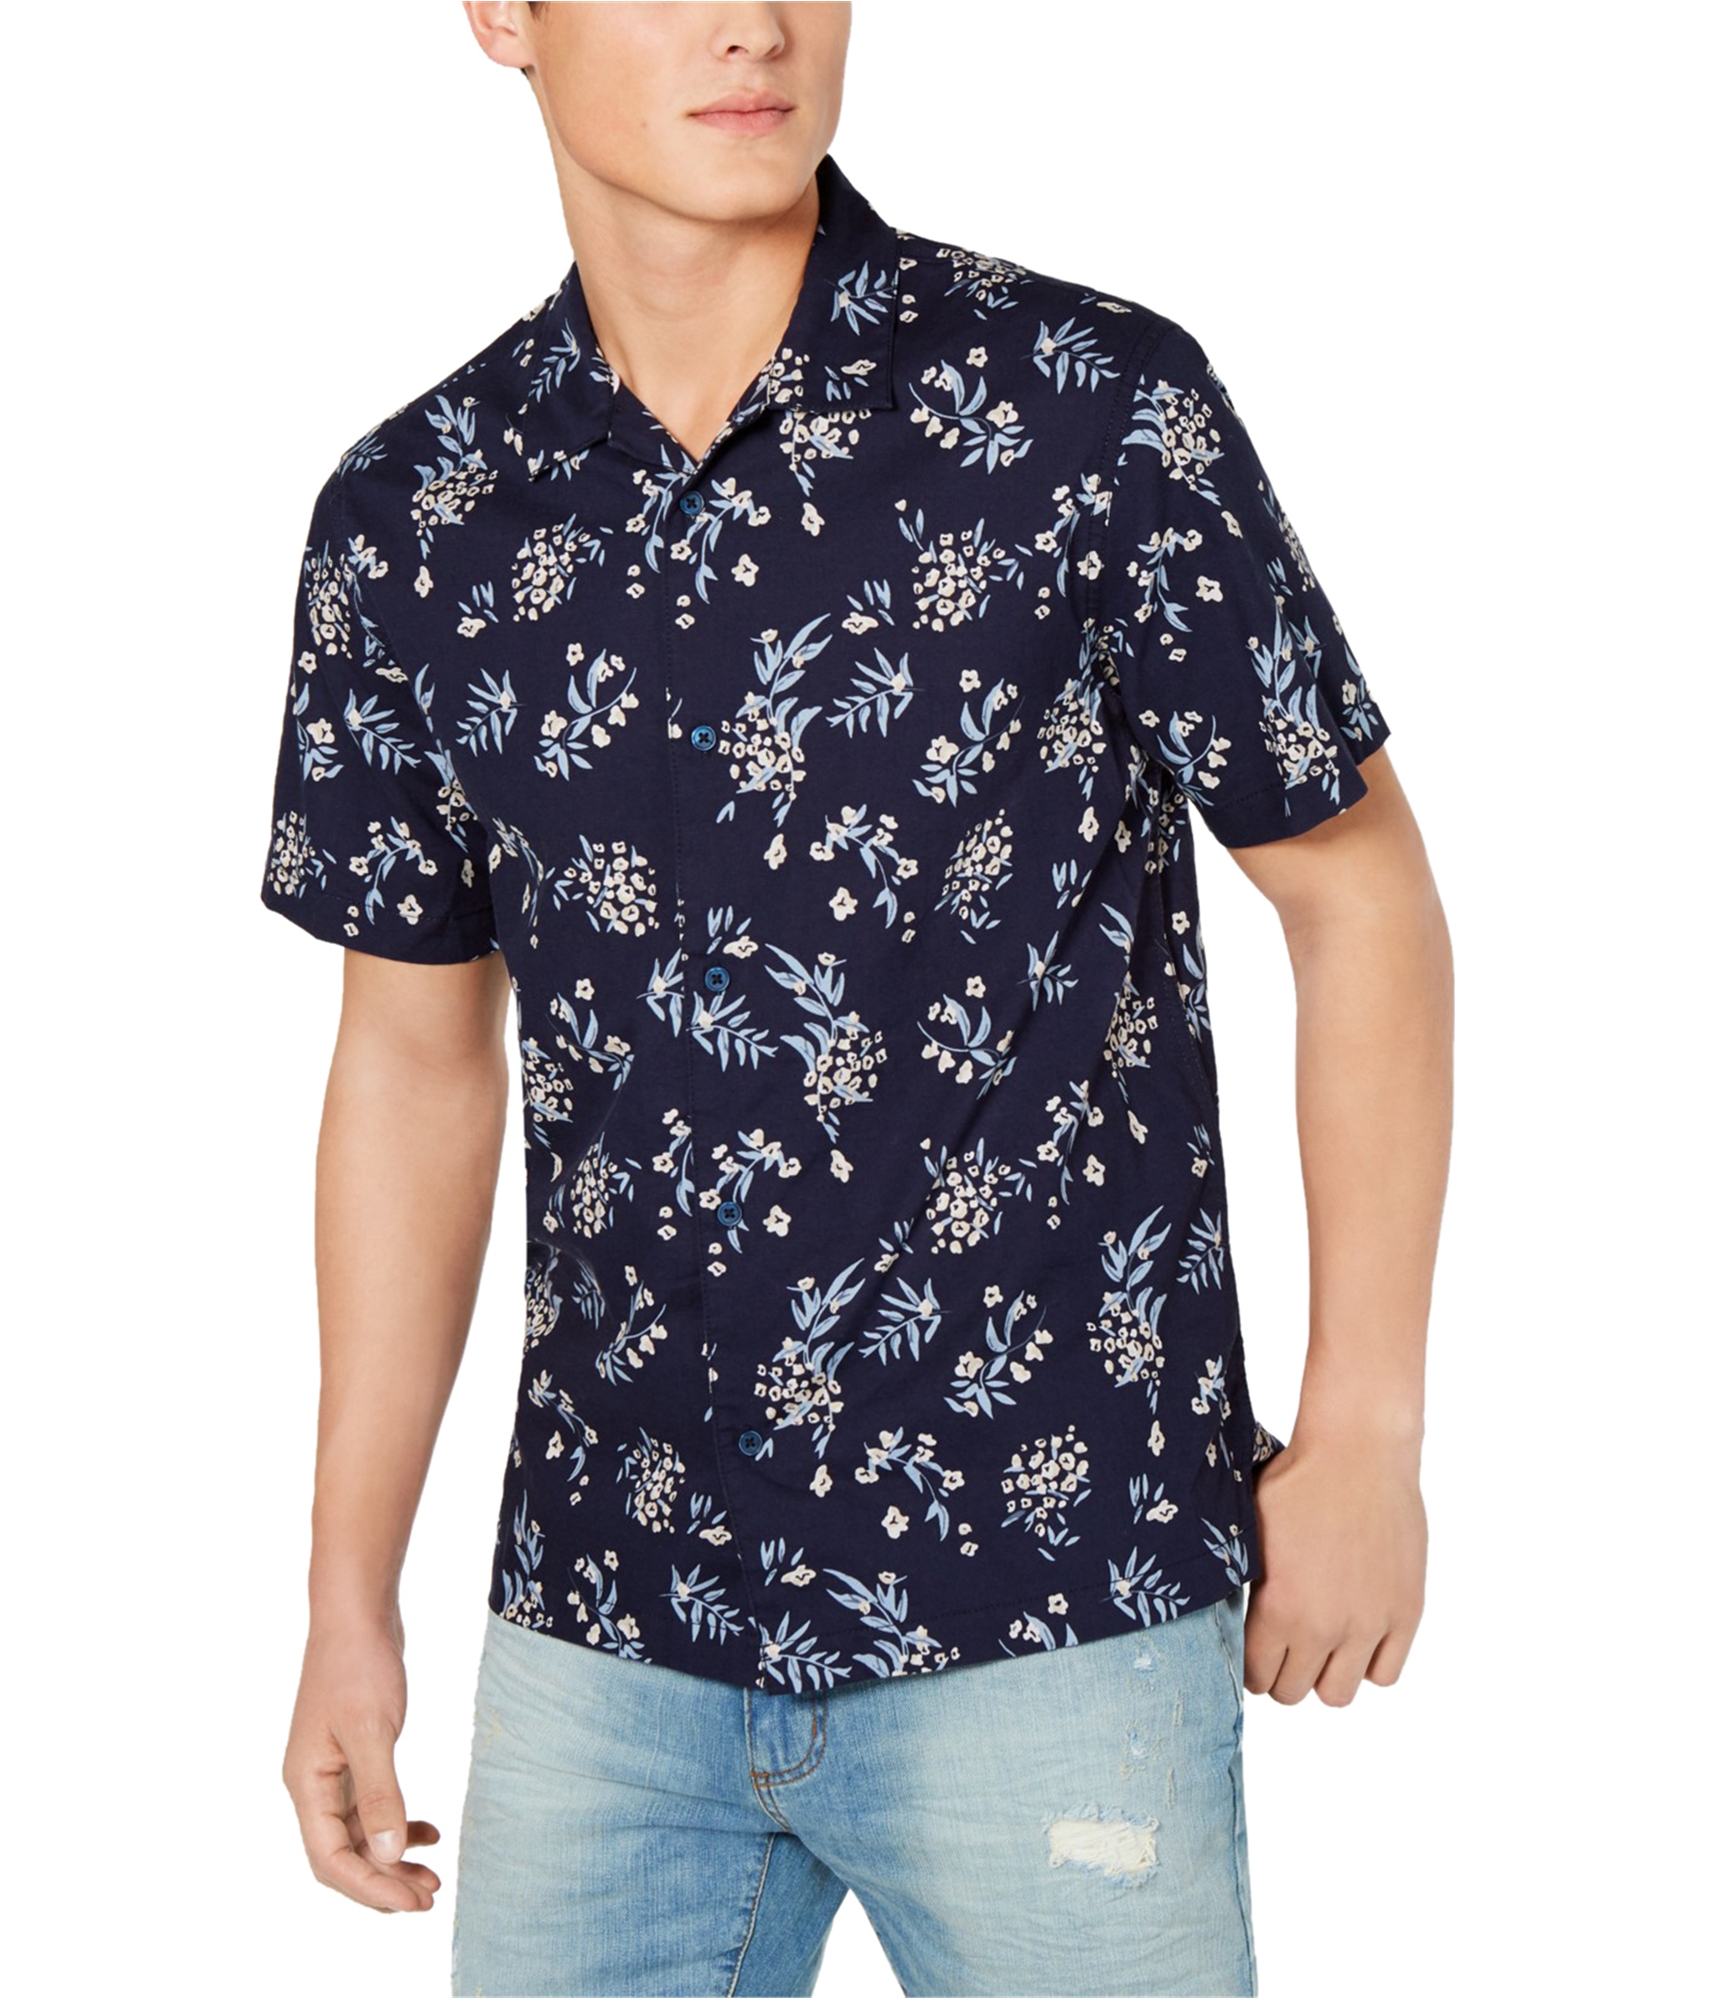 American Rag Mens Floral Button Up Shirt, Blue, Medium 636206839313 | eBay